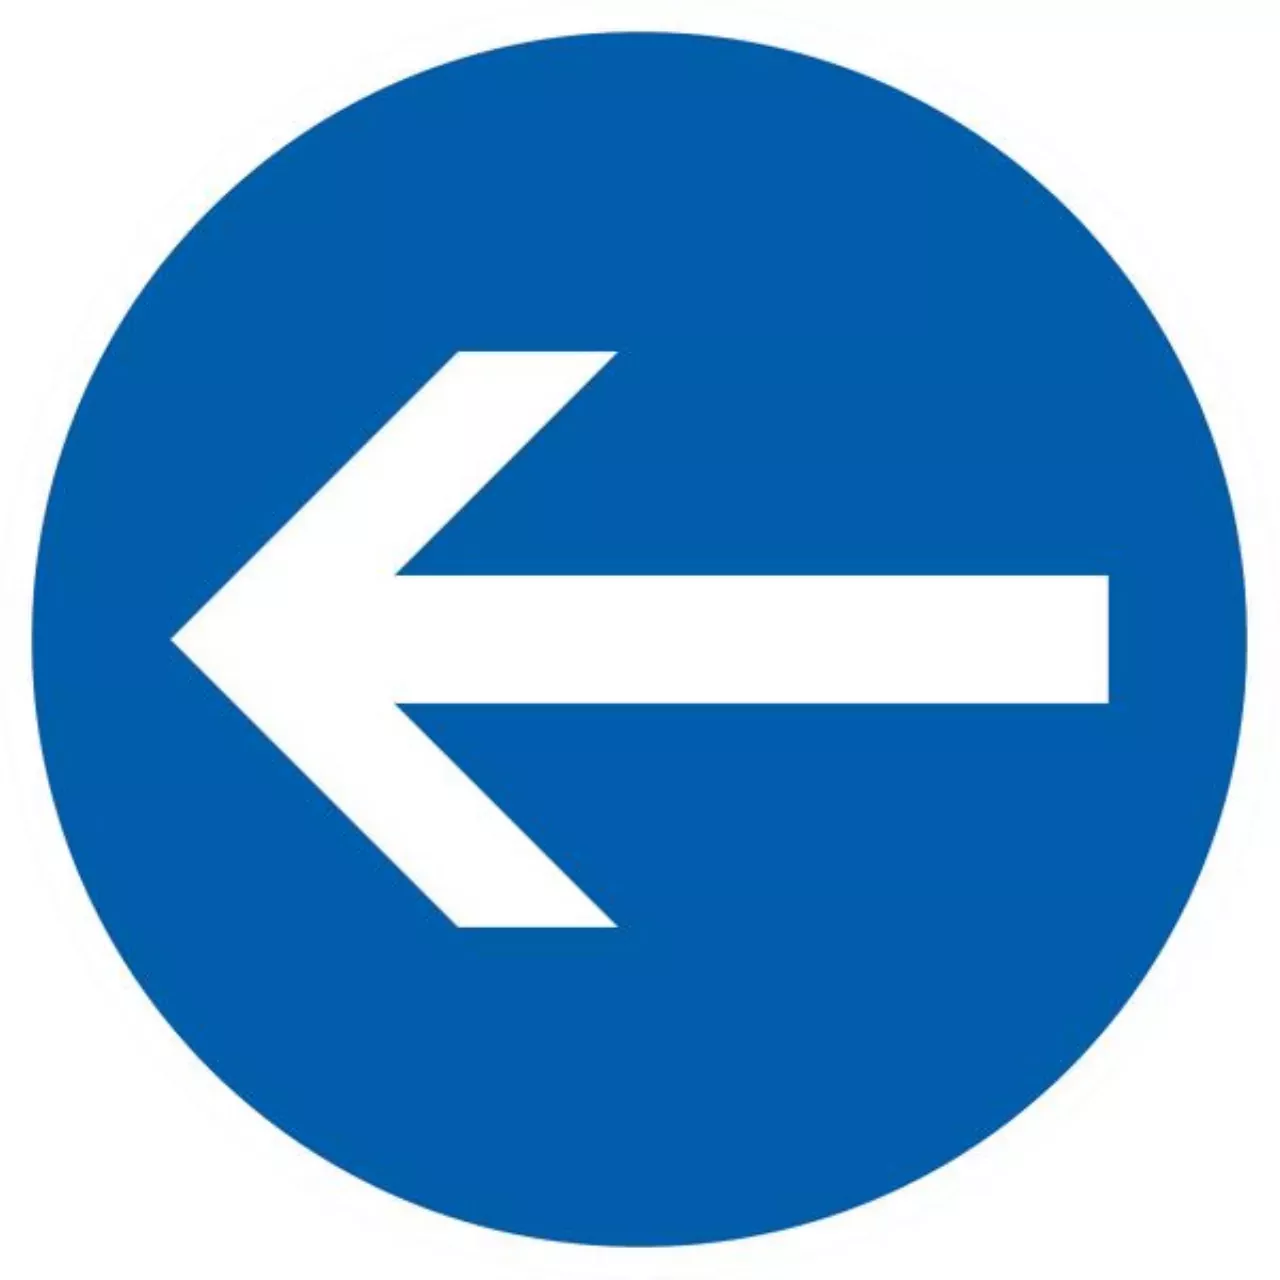 Verkehrszeichen 211-10 Vorgeschriebene Fahrtrichtung  hier links - RD 600 2 mm RA2